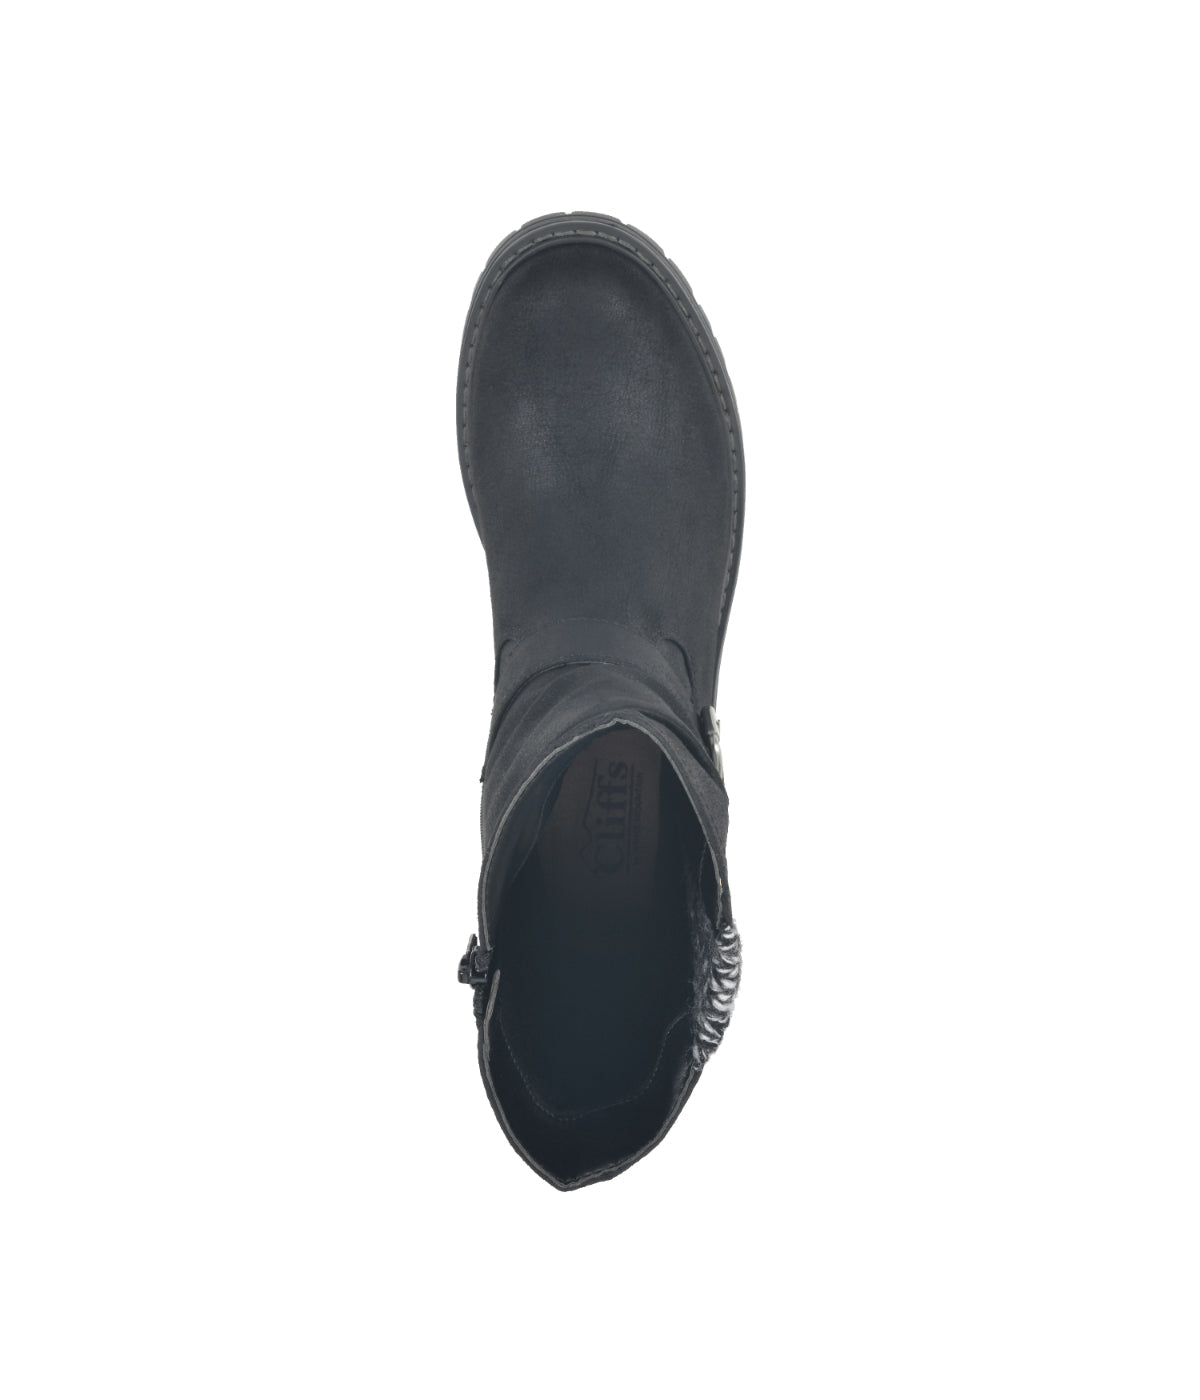 Mingle Mid Shaft Boots Black/Fabric